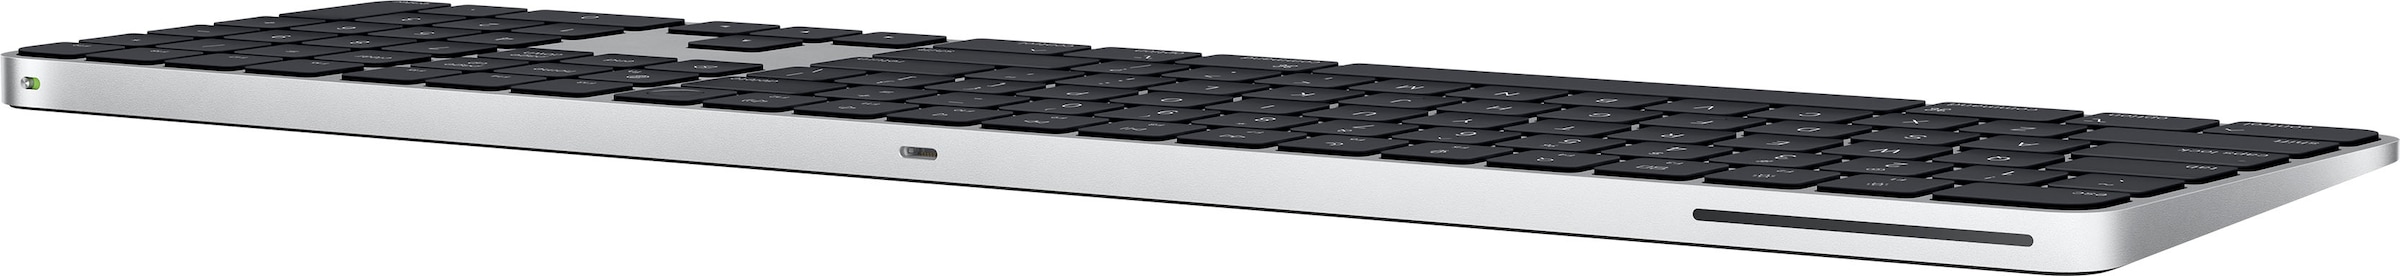 Apple Apple-Tastatur »Magic Keyboard mit Touch ID und Ziffernblock«, (Ziffernblock-Multimedia-Tasten)